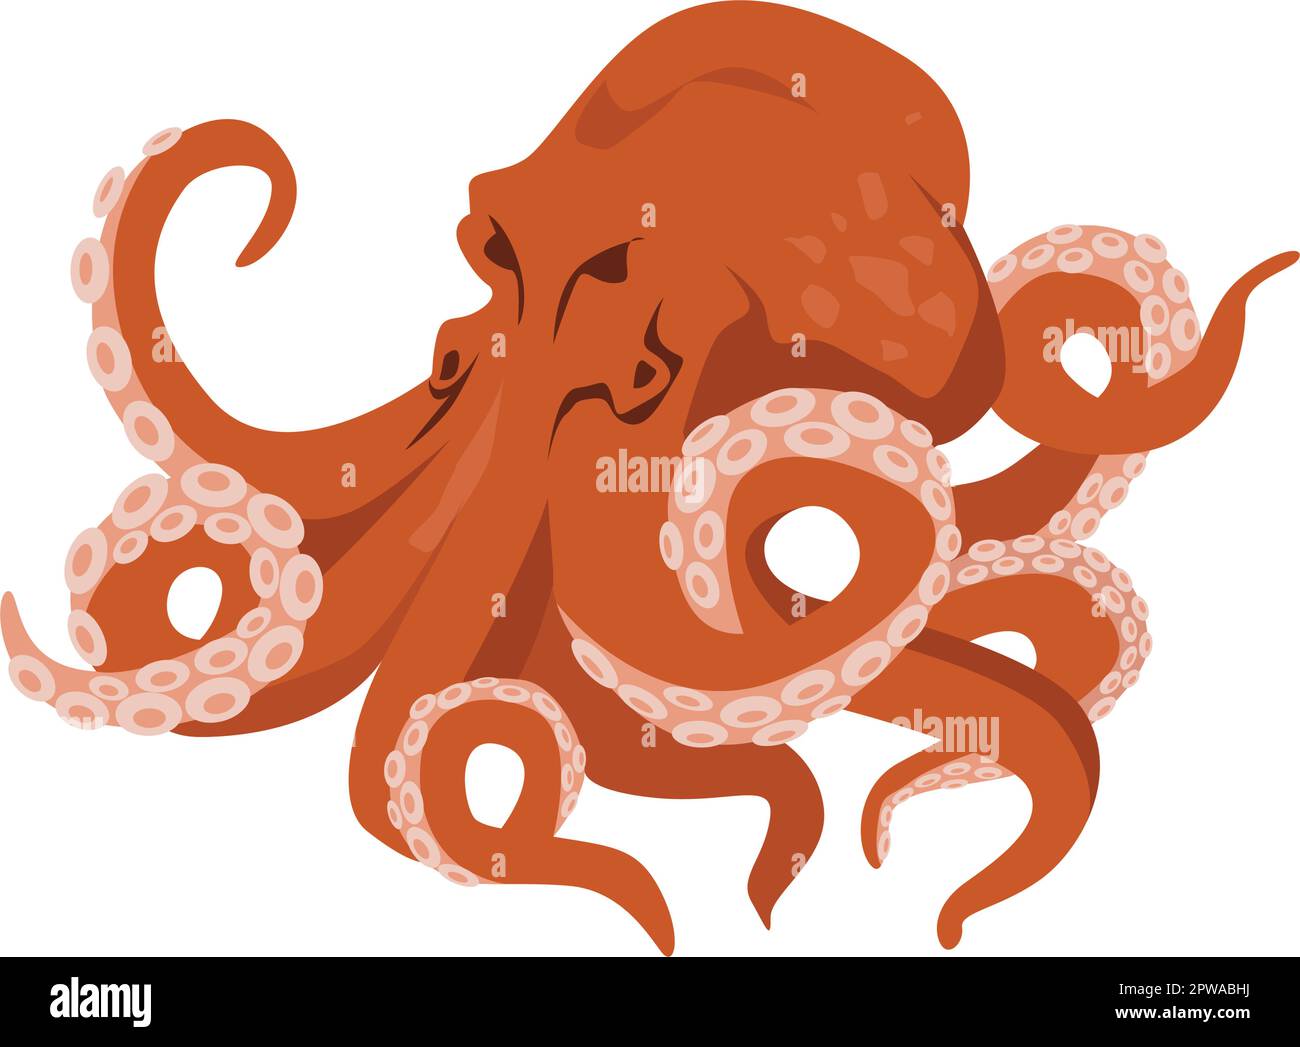 Detailed Scary Kraken or Big Octopus Illustration Stock Vector